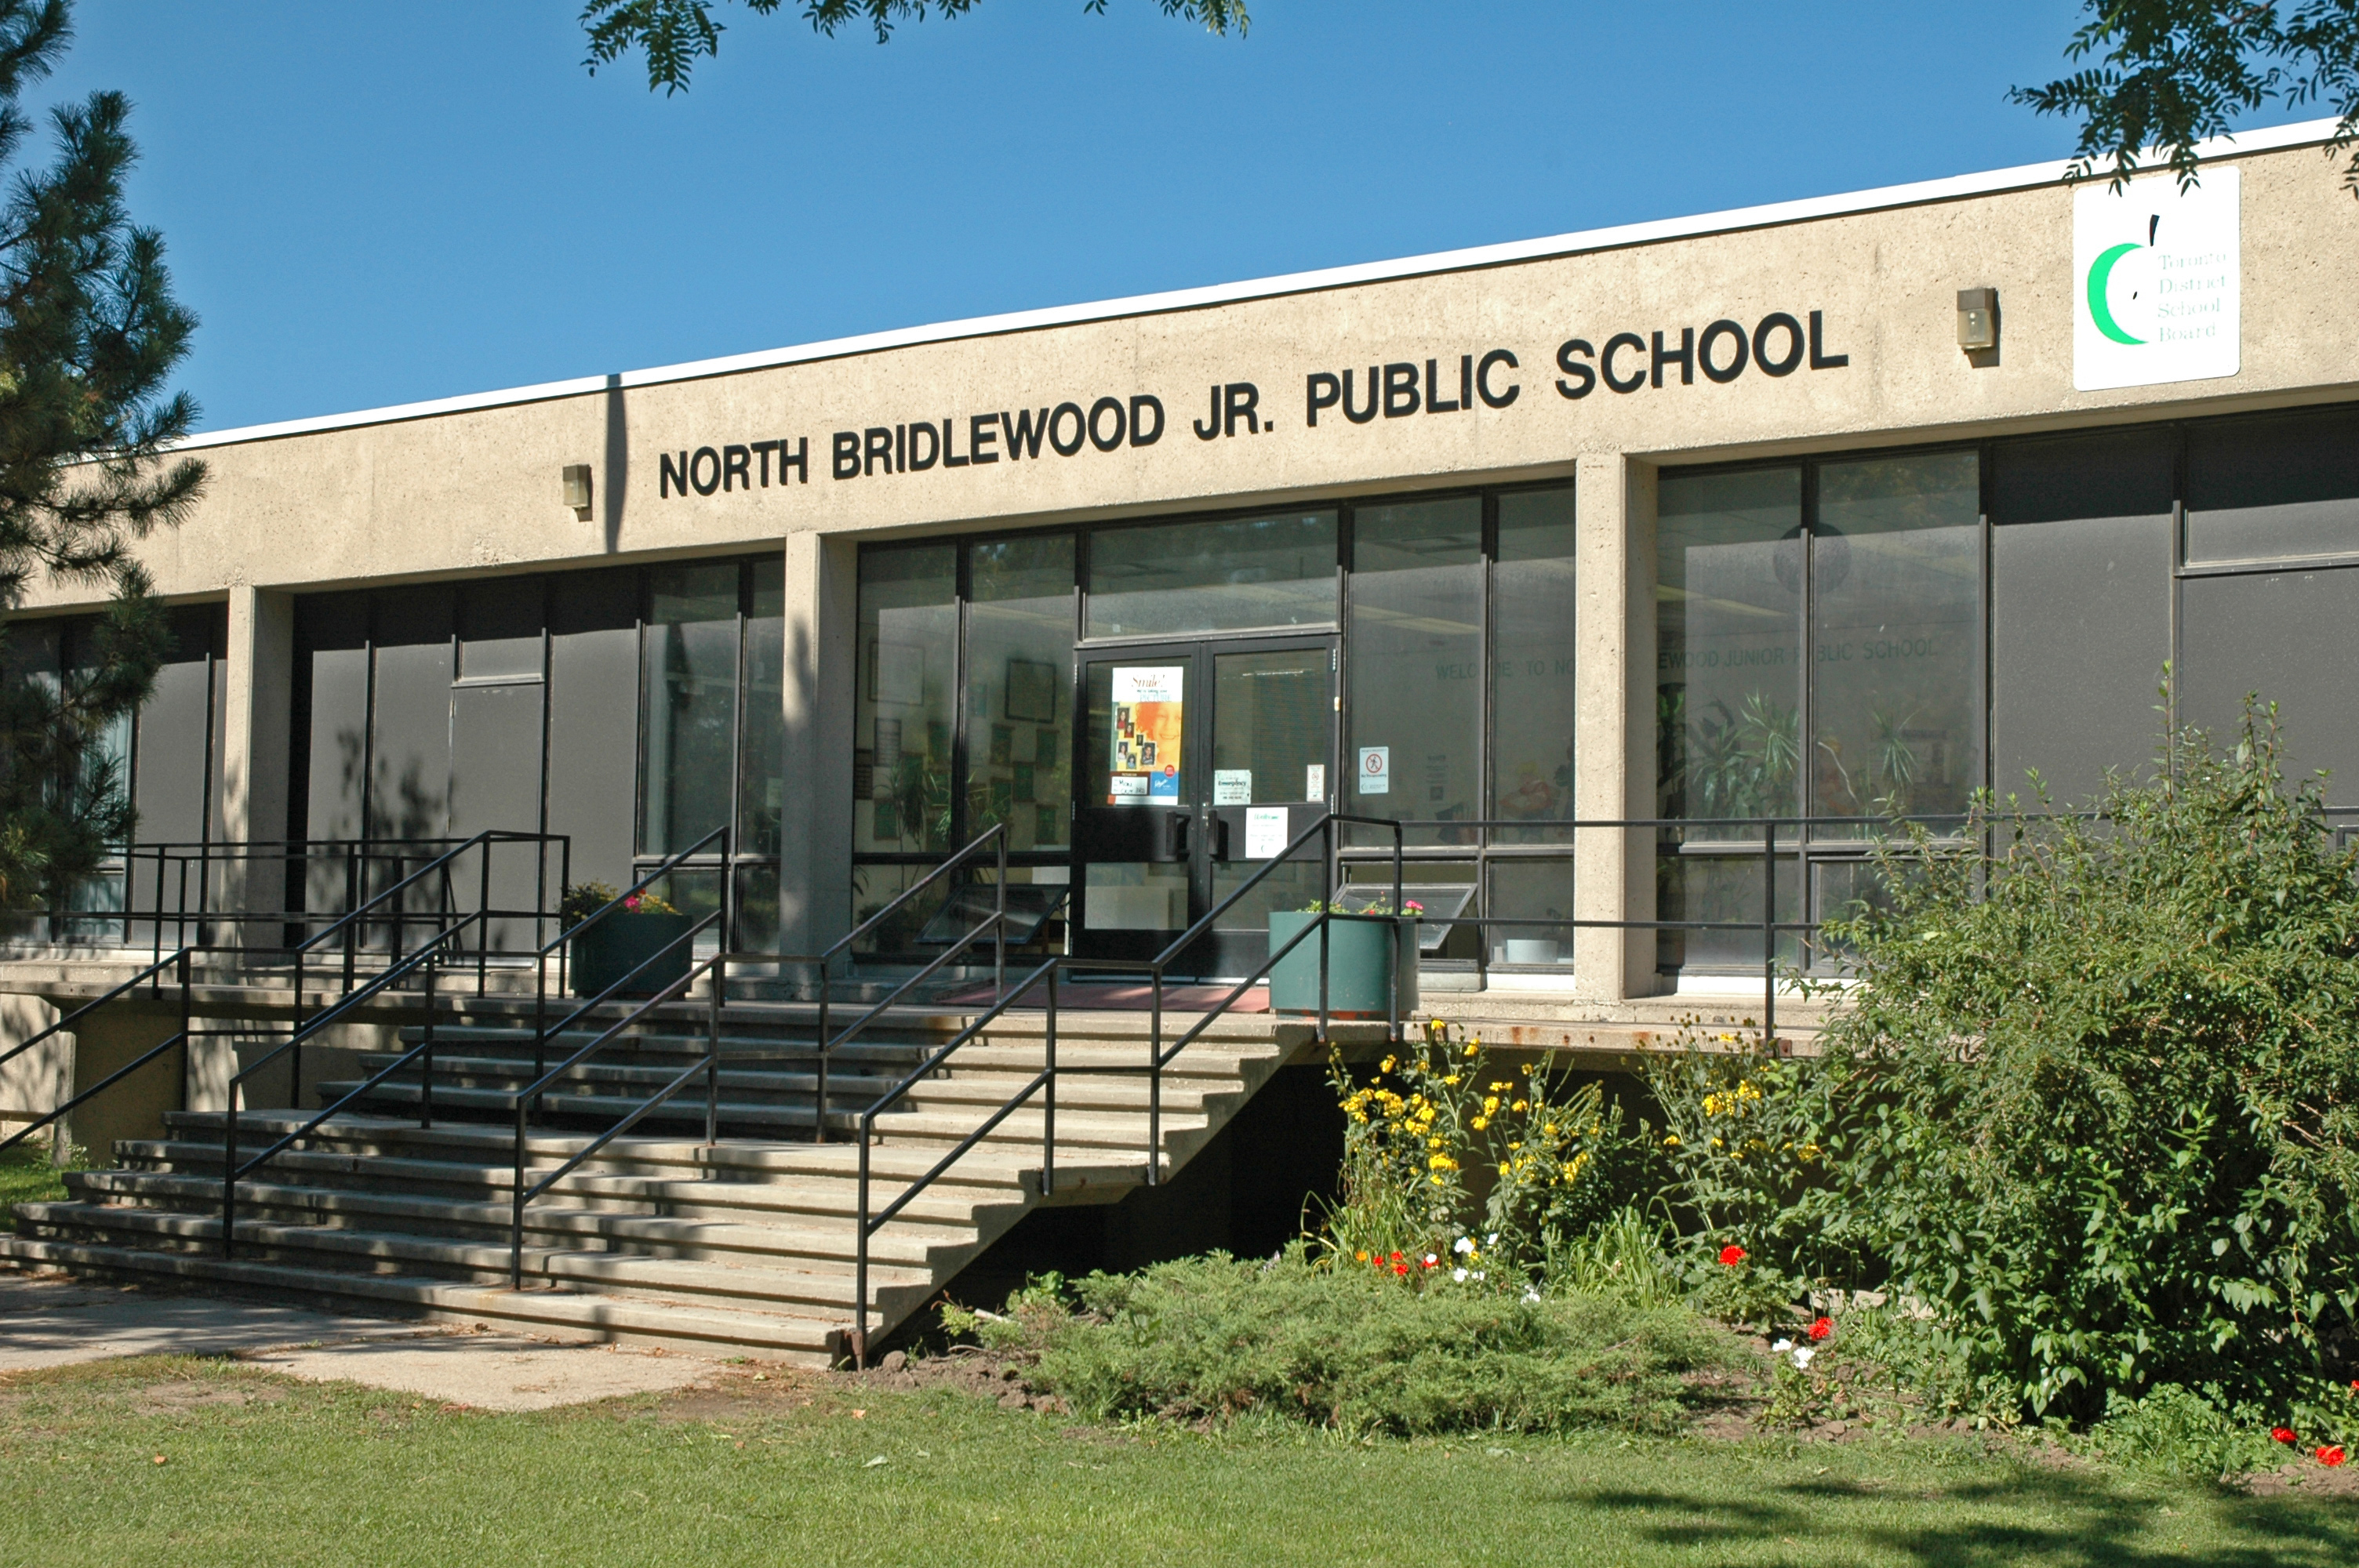 North Bridlewood Jr. Public School